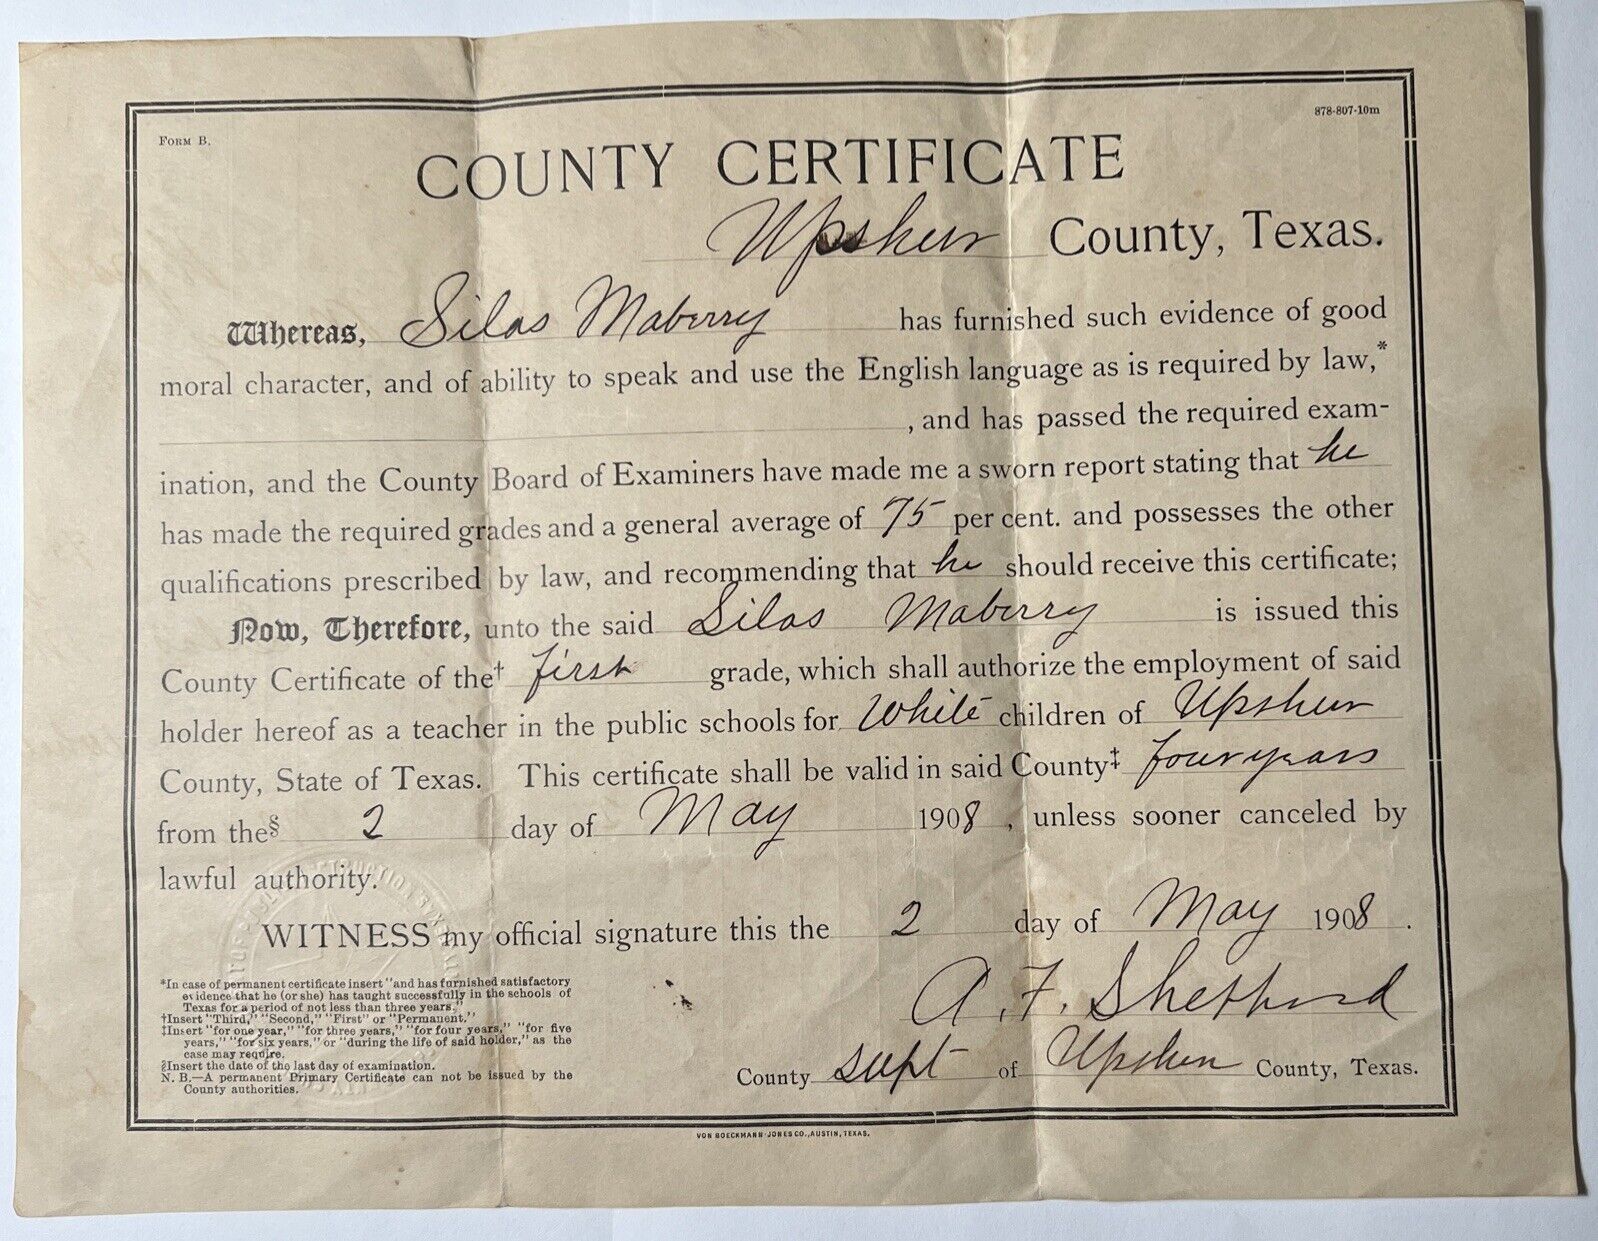 1908 UPSHUR county TEXAS Public School Teaching Certificate for WHITE CHILDREN